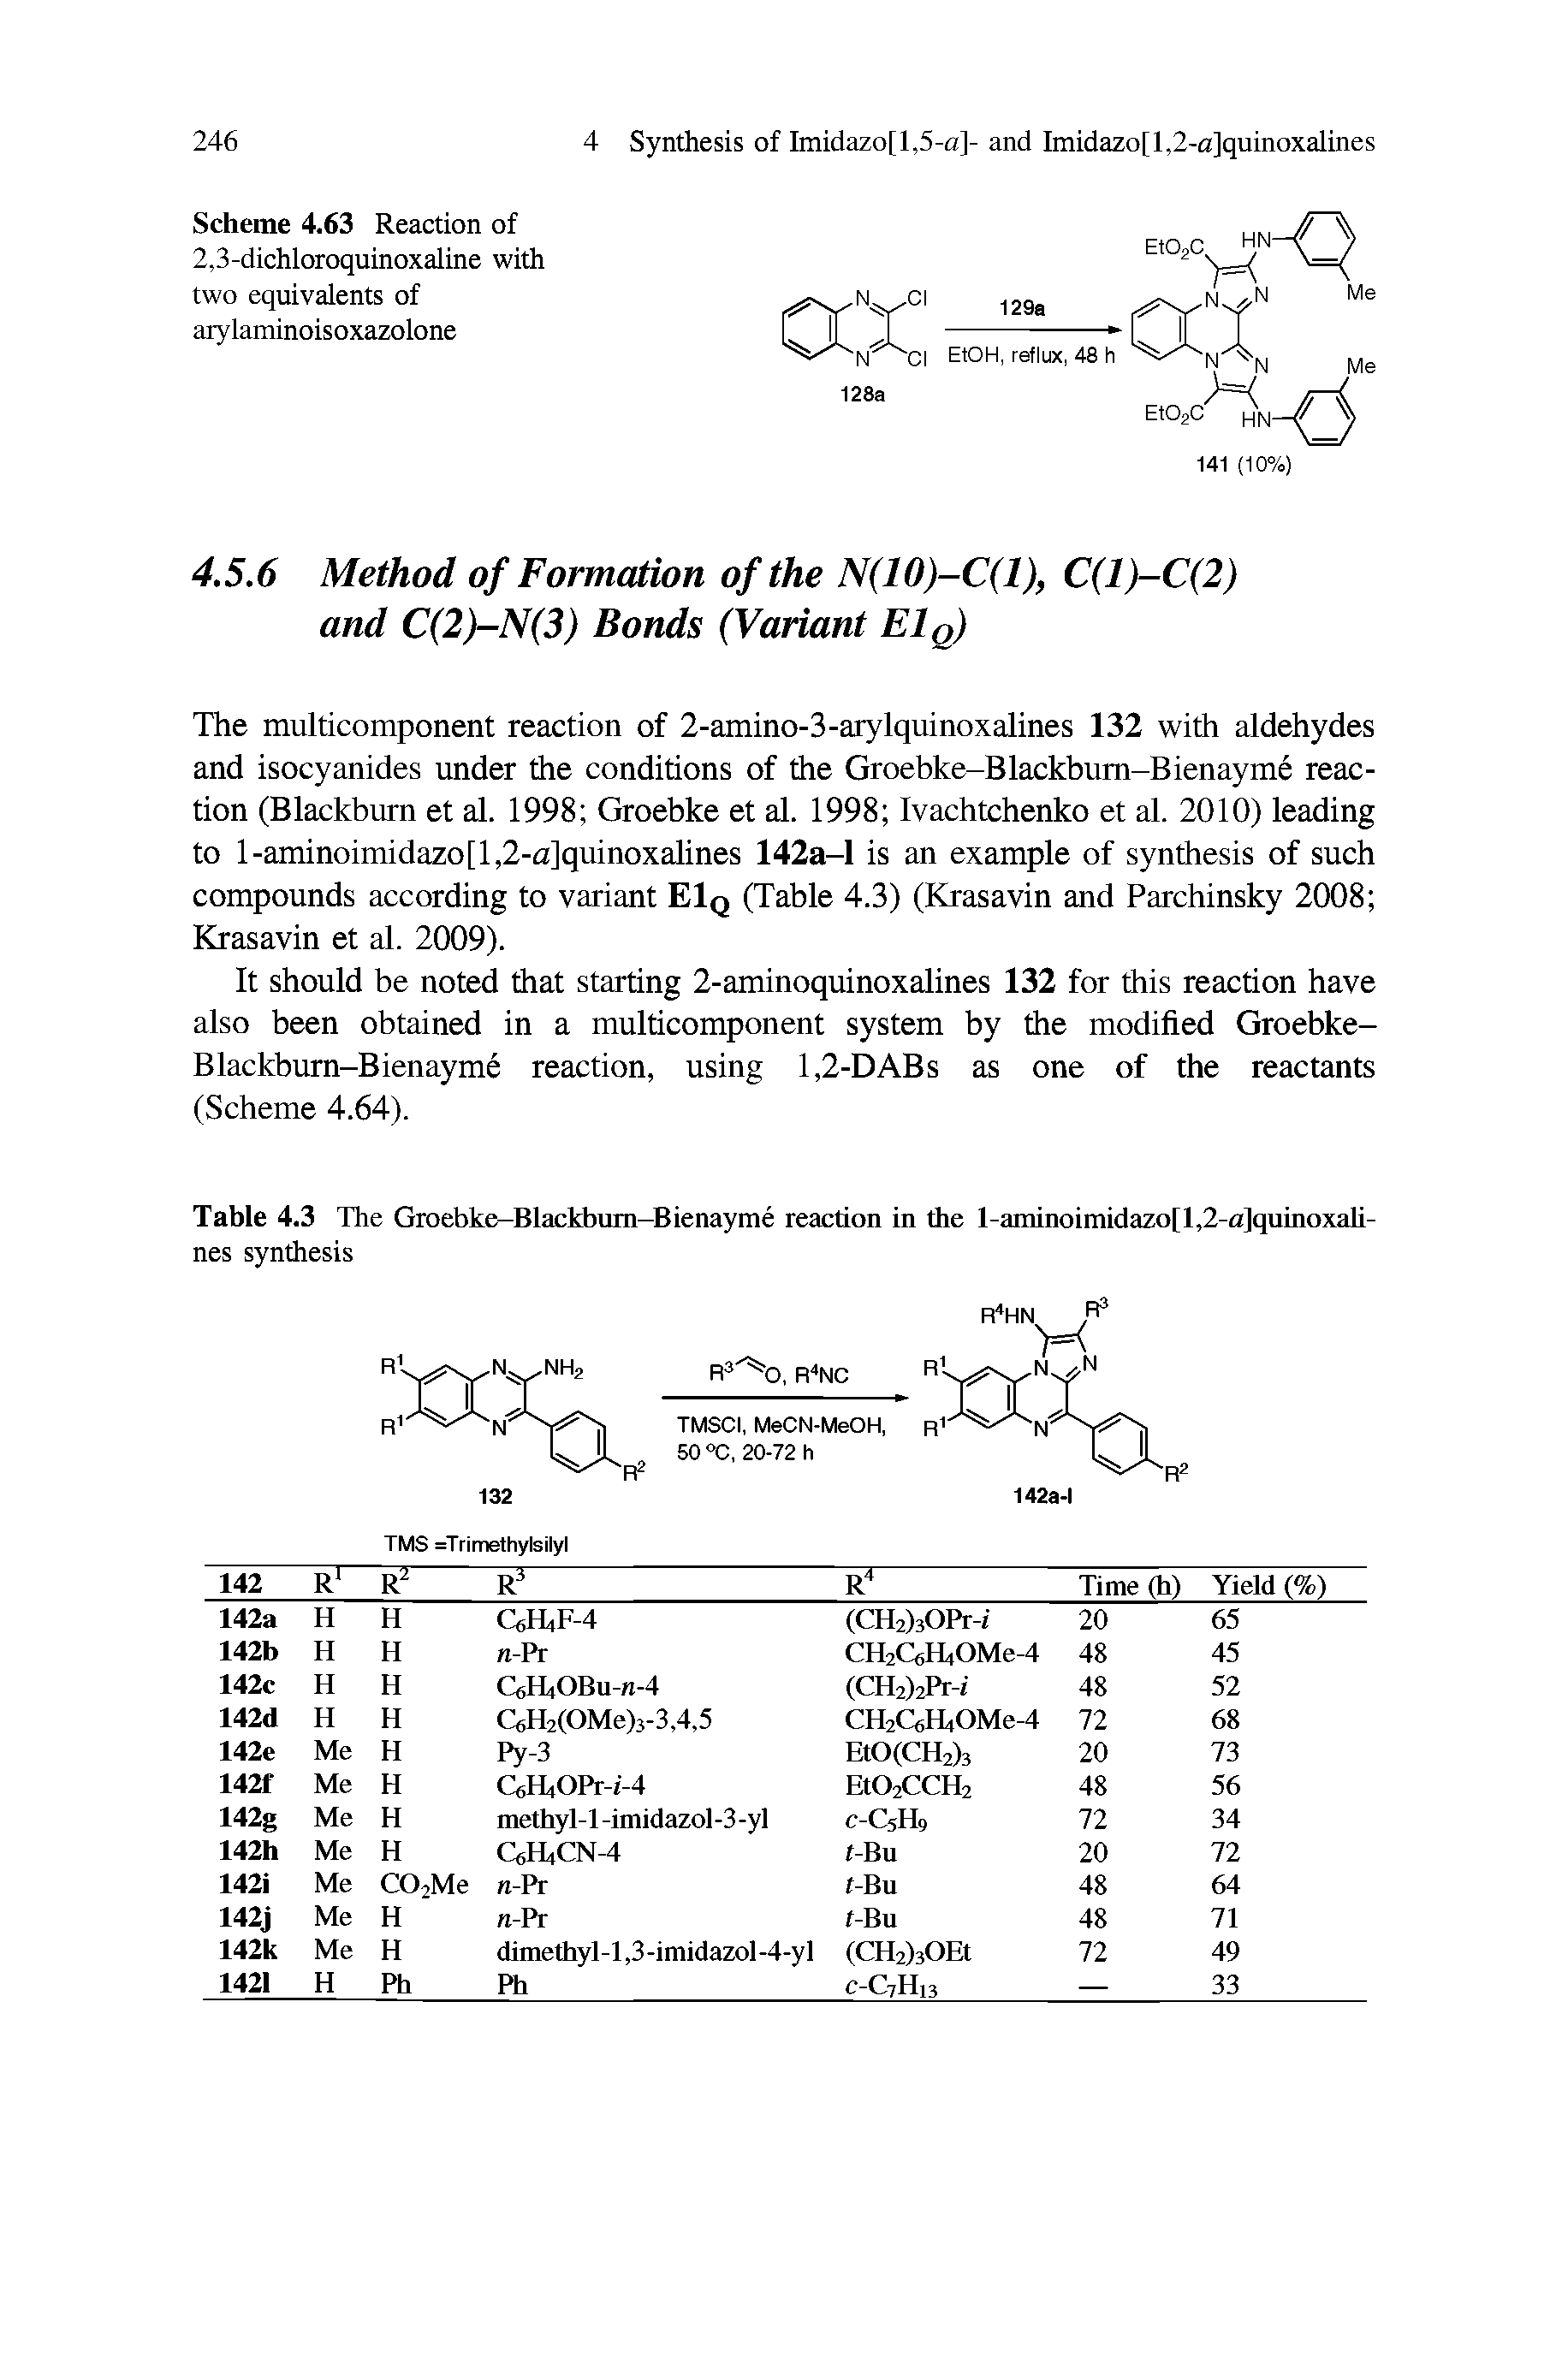 Table 4.3 The Groebke-Blackbum-Bienayme reaction in the l-aminoimidazo[l,2-a]quinoxali-...